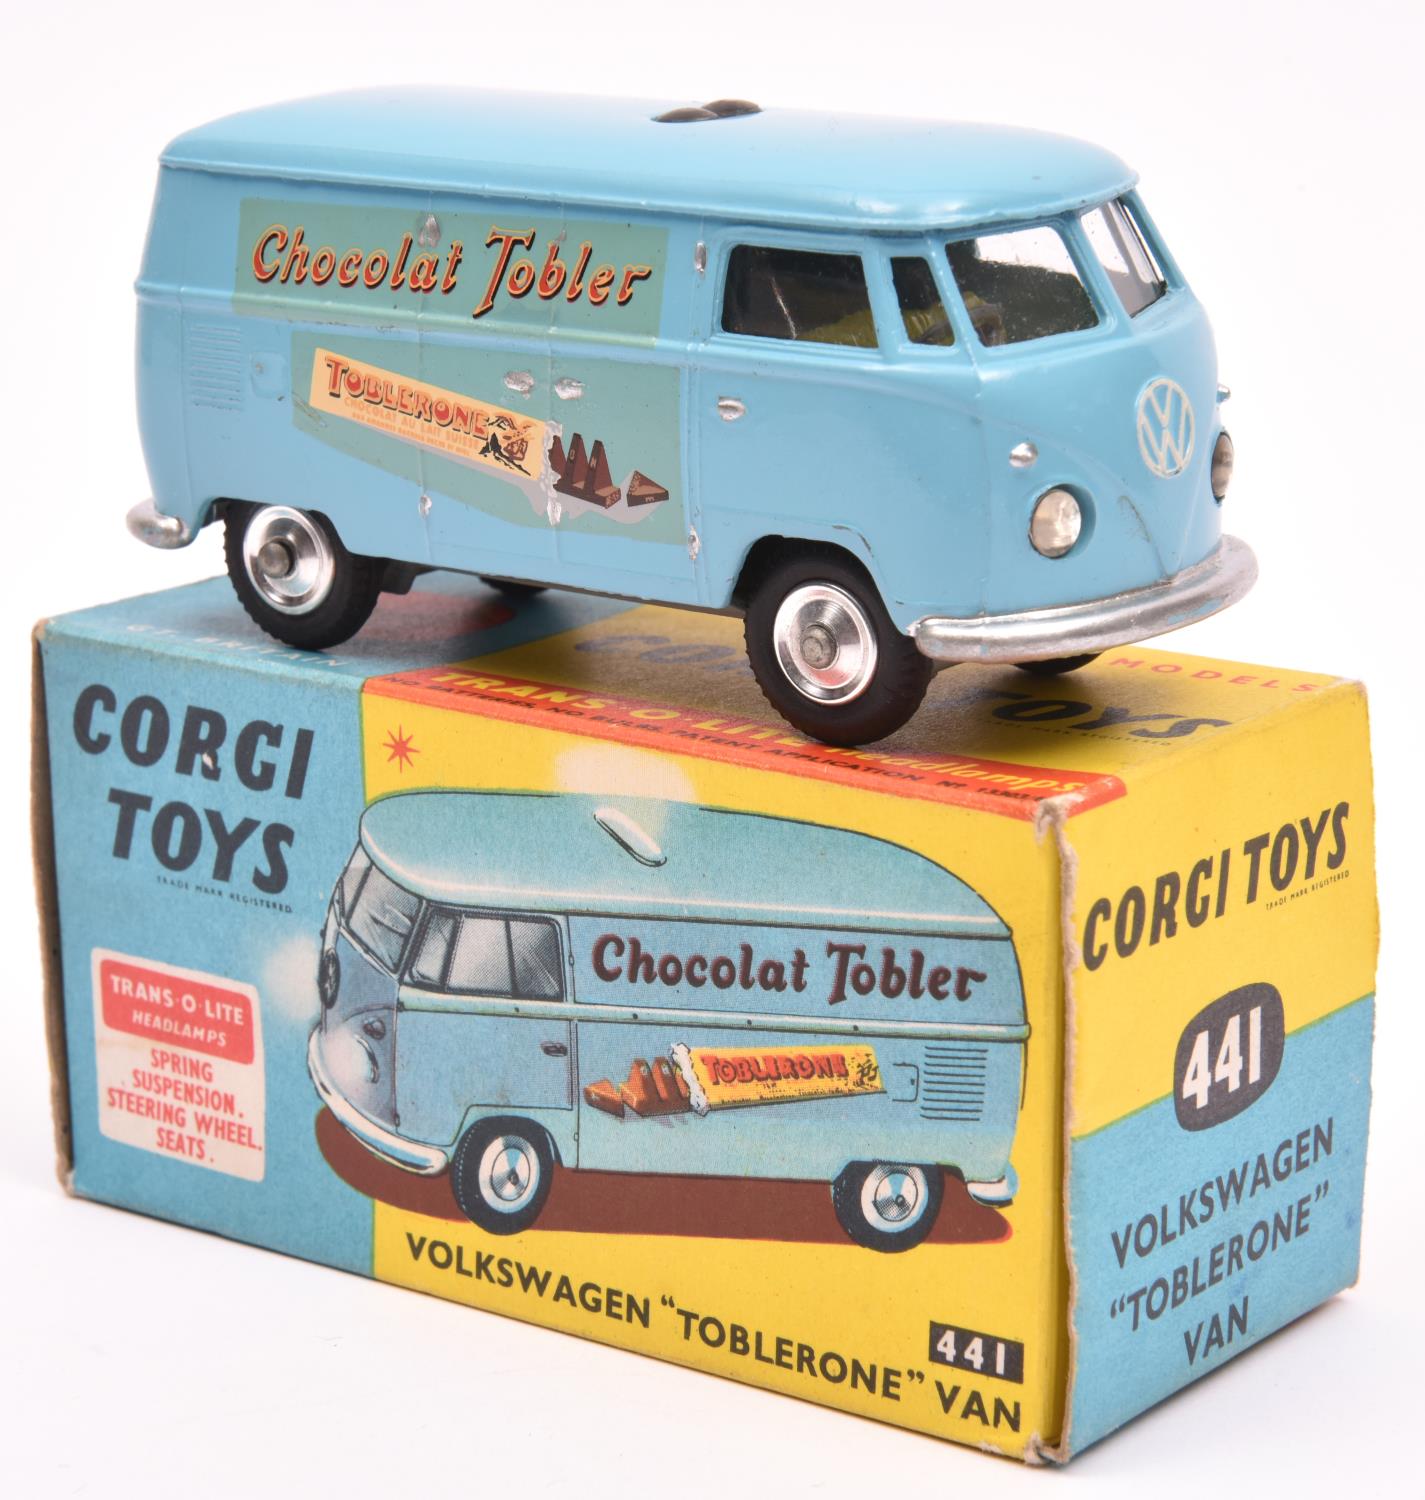 Corgi Toys Volkswagen 'Toblerone' Van (441). In light blue with yellow interior, 'Chocolat Tobler'